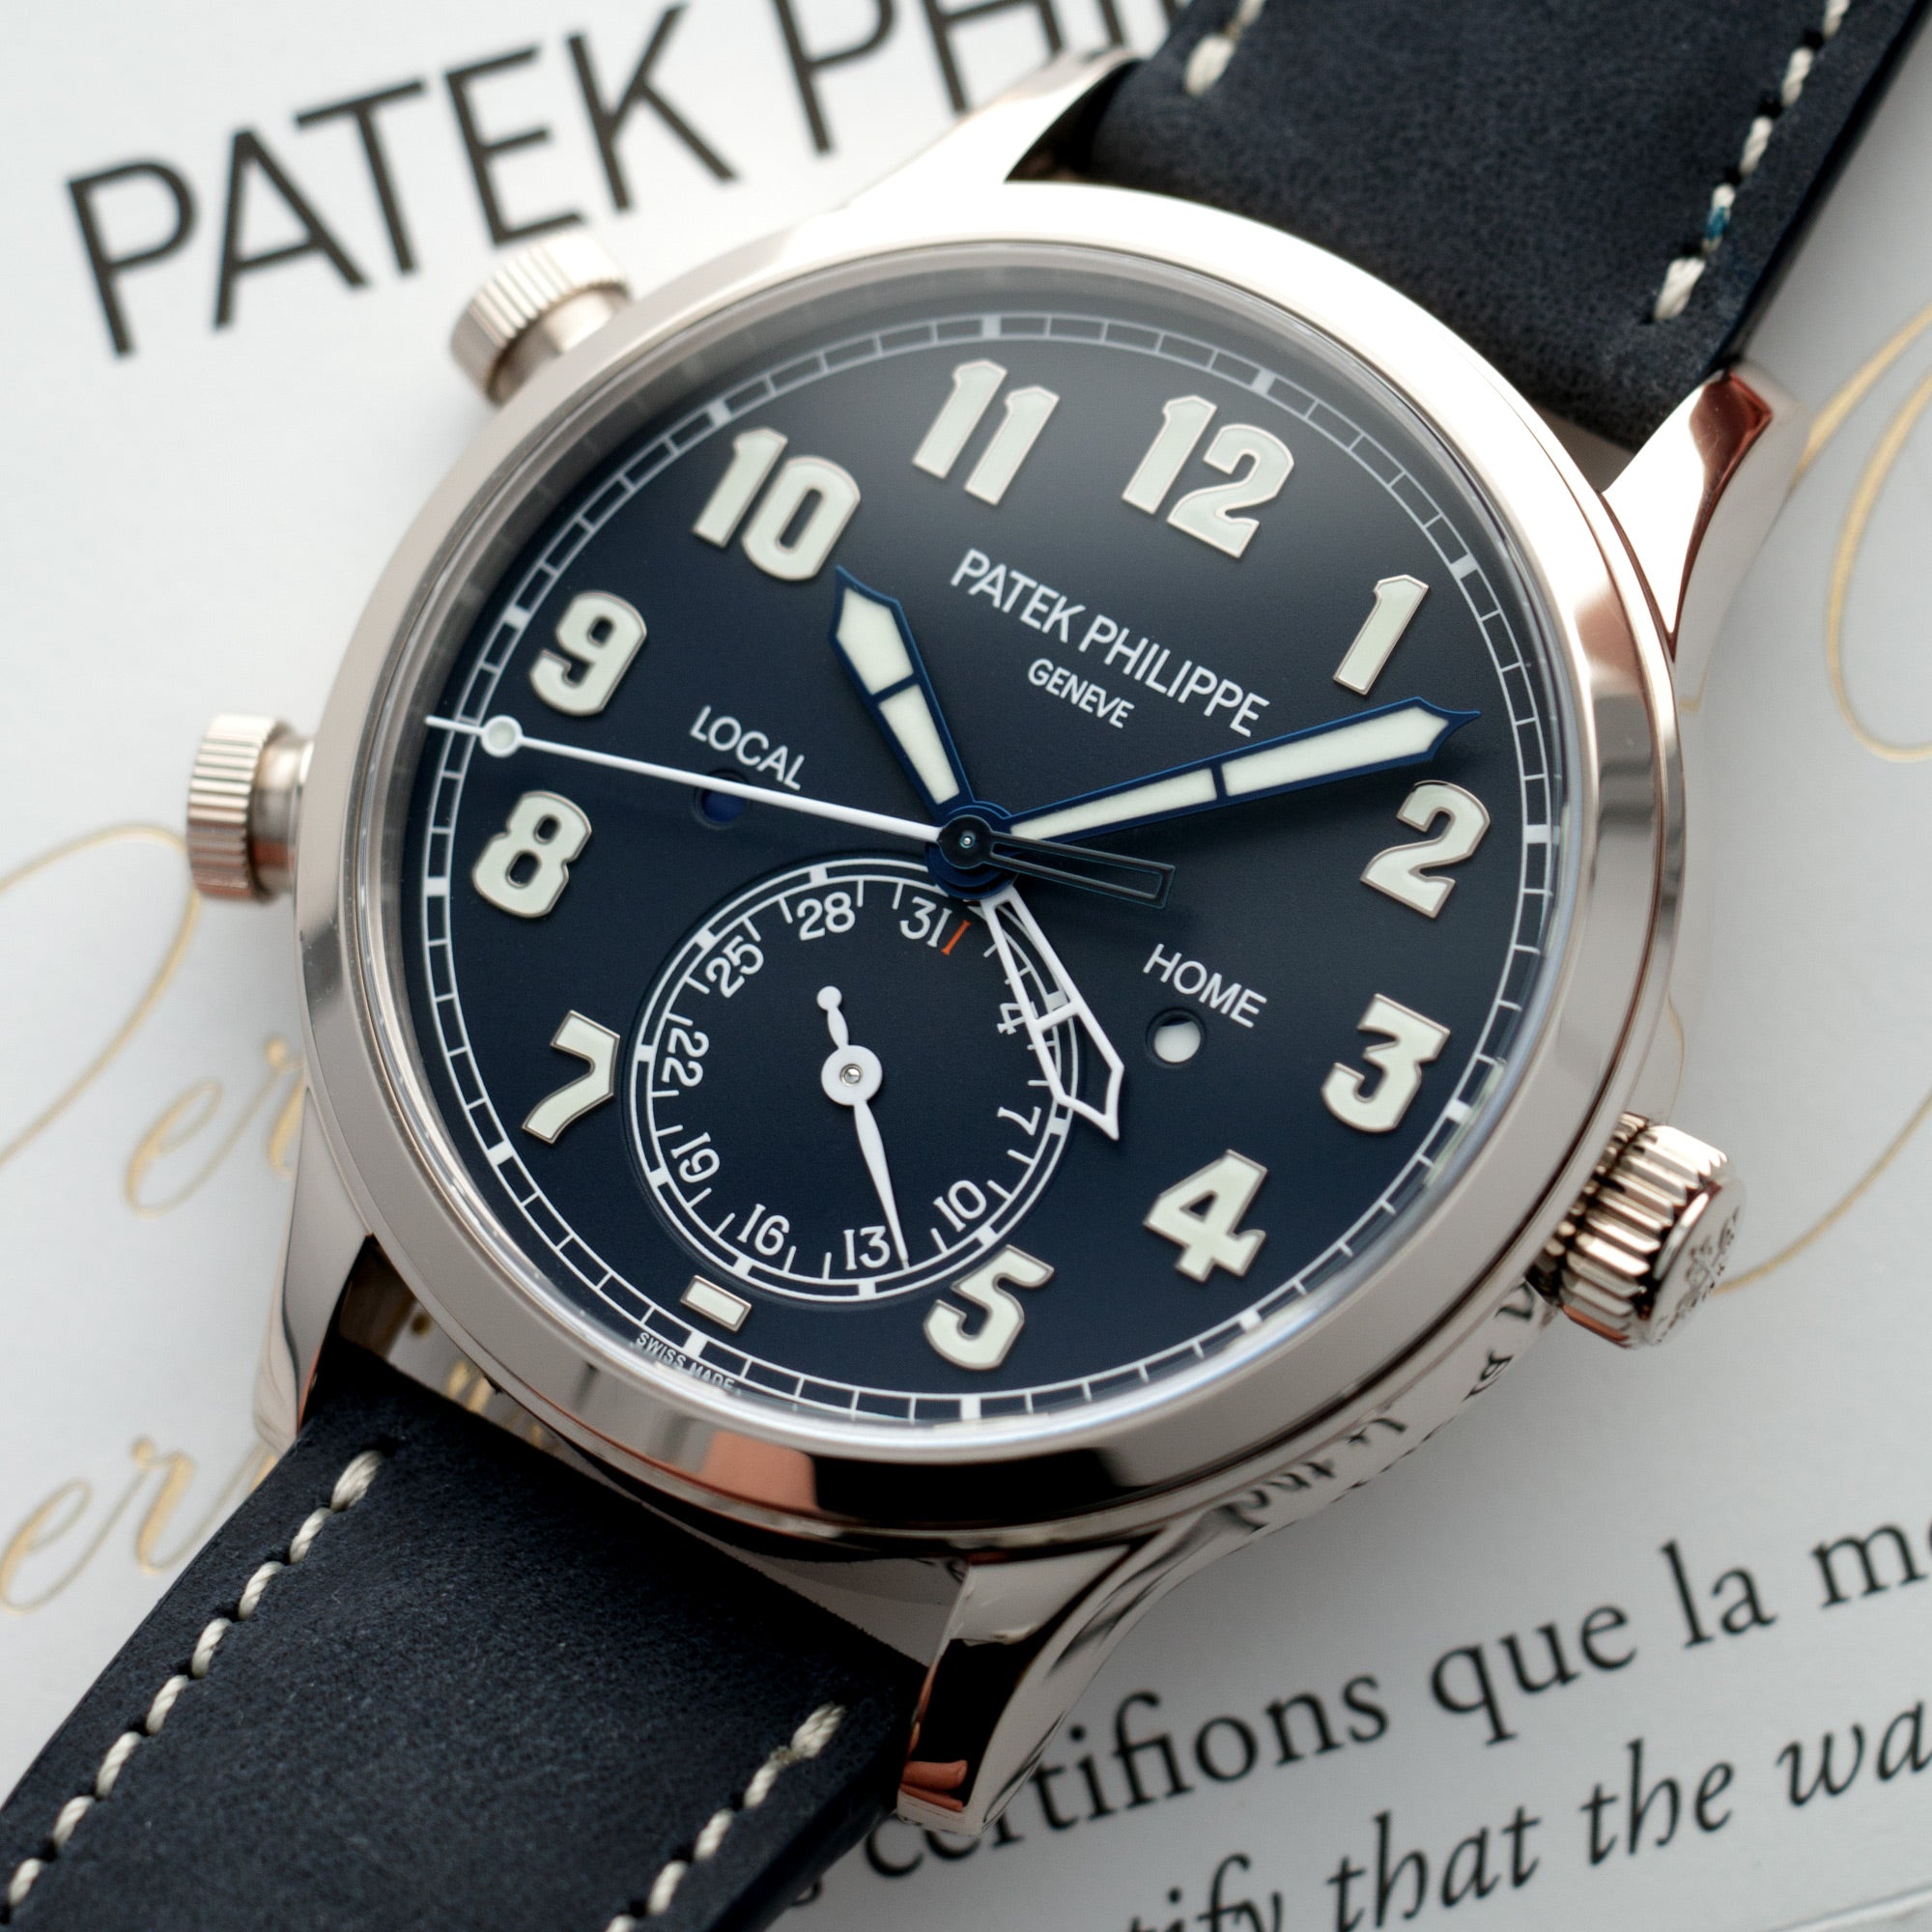 Patek Philippe - Patek Philippe Calatrava Pilot Travel Time Ref. 5524G - The Keystone Watches